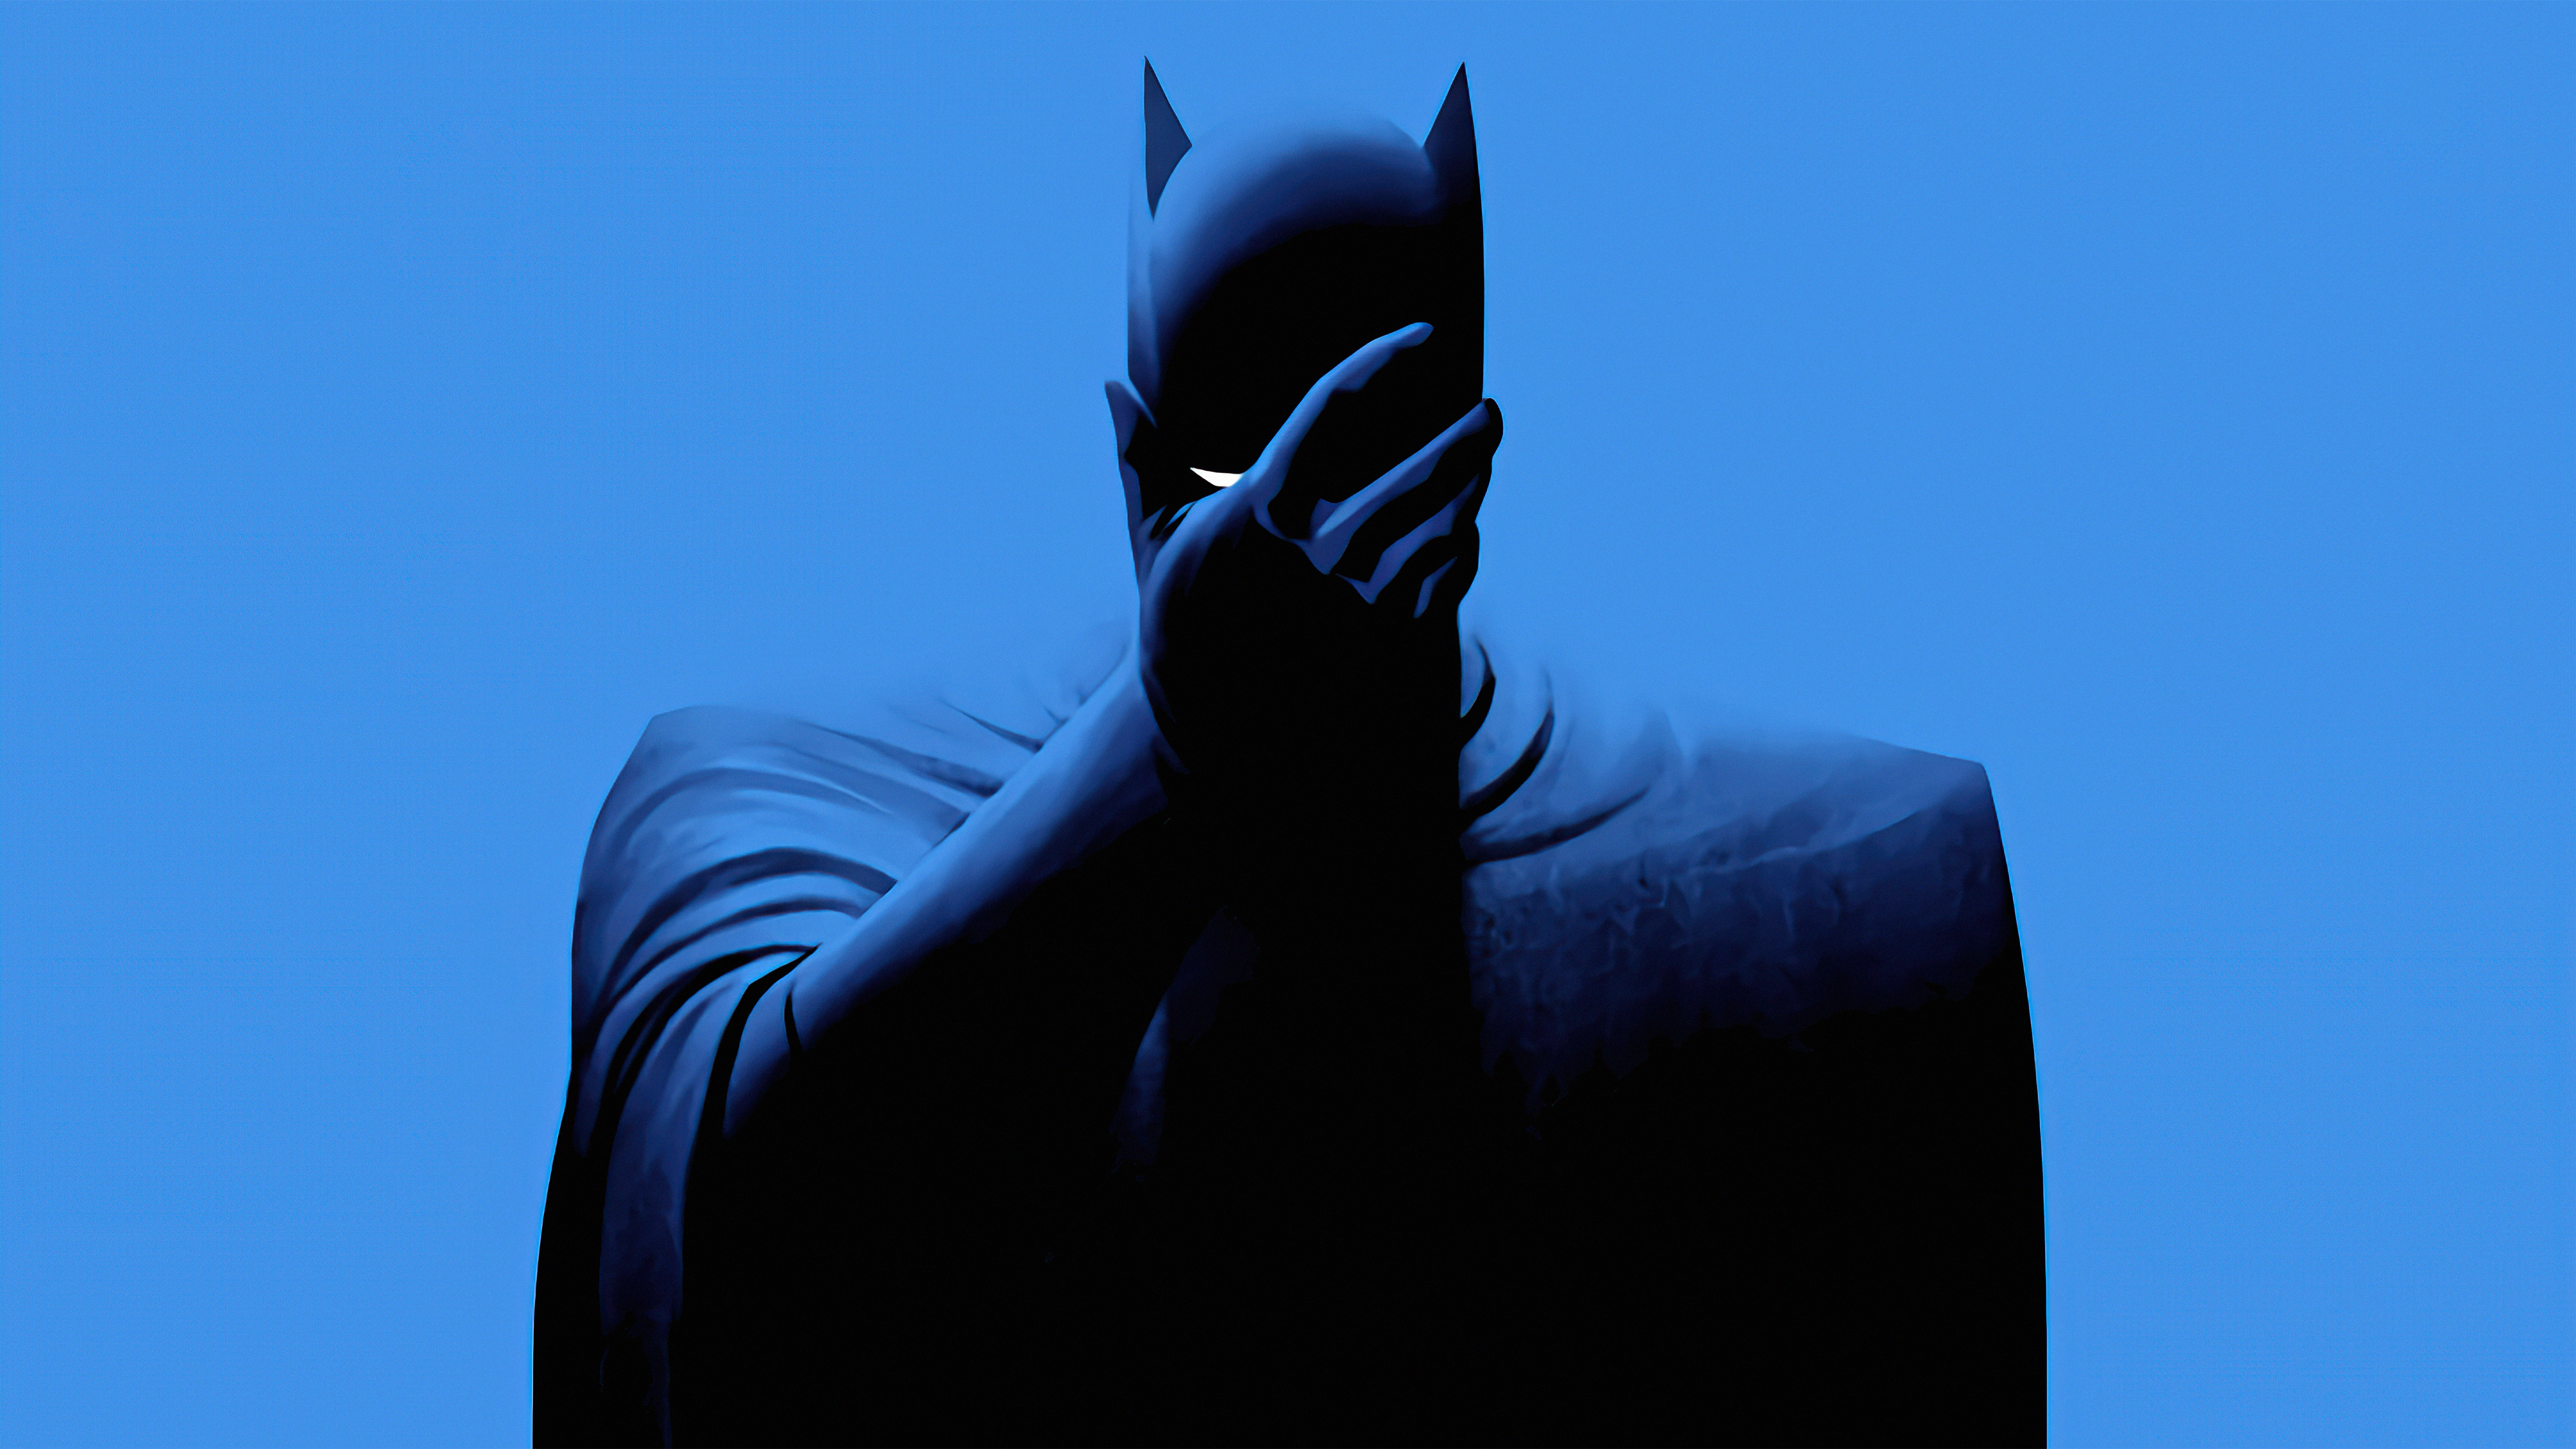 Batman Minimalist style blue background Wallpaper 5k Ultra HD ID:7100